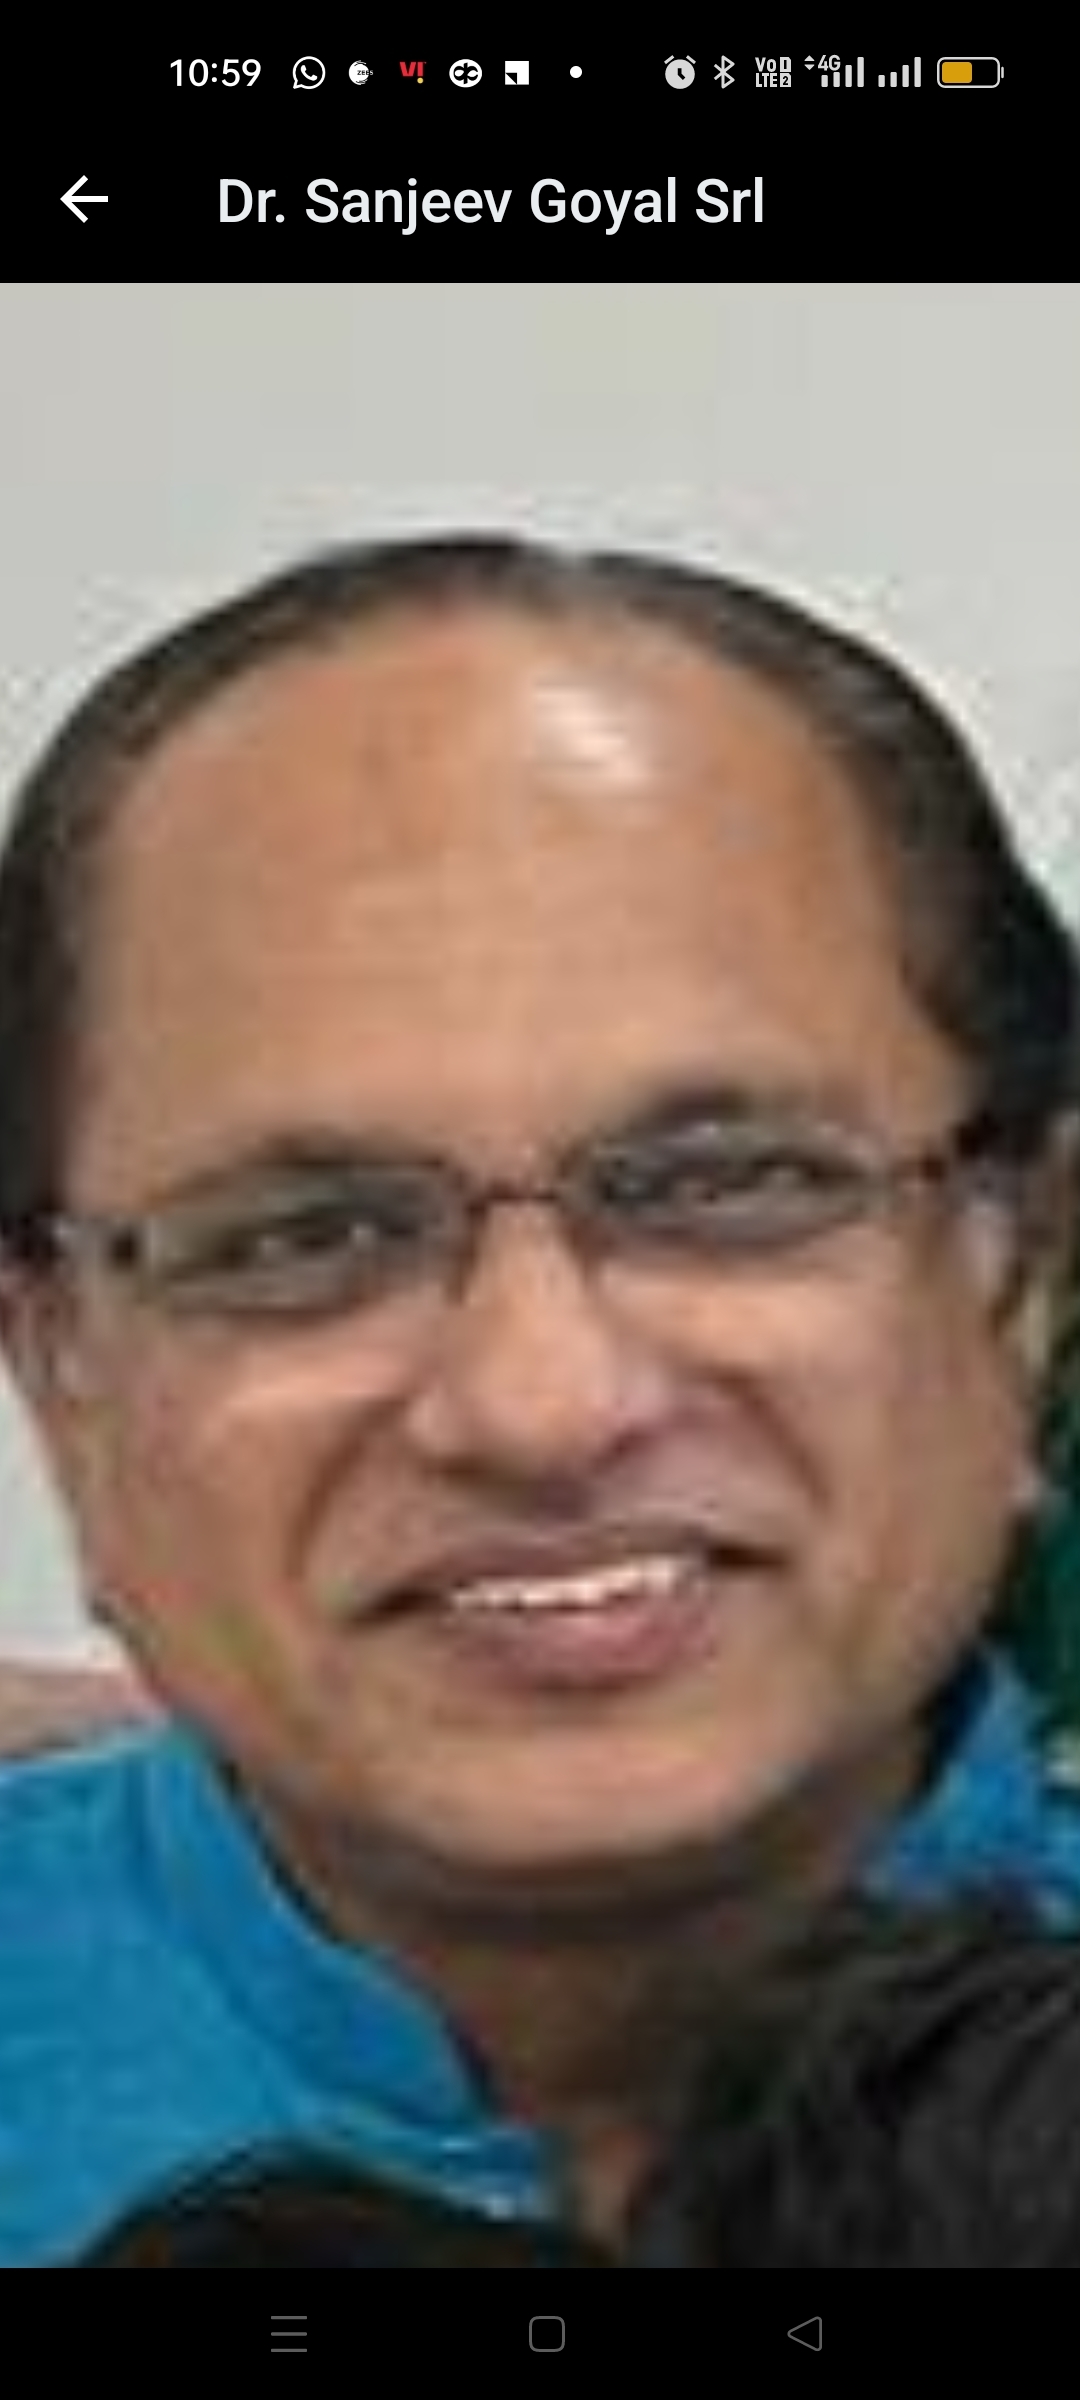 Dr. Sanjeev Goyal